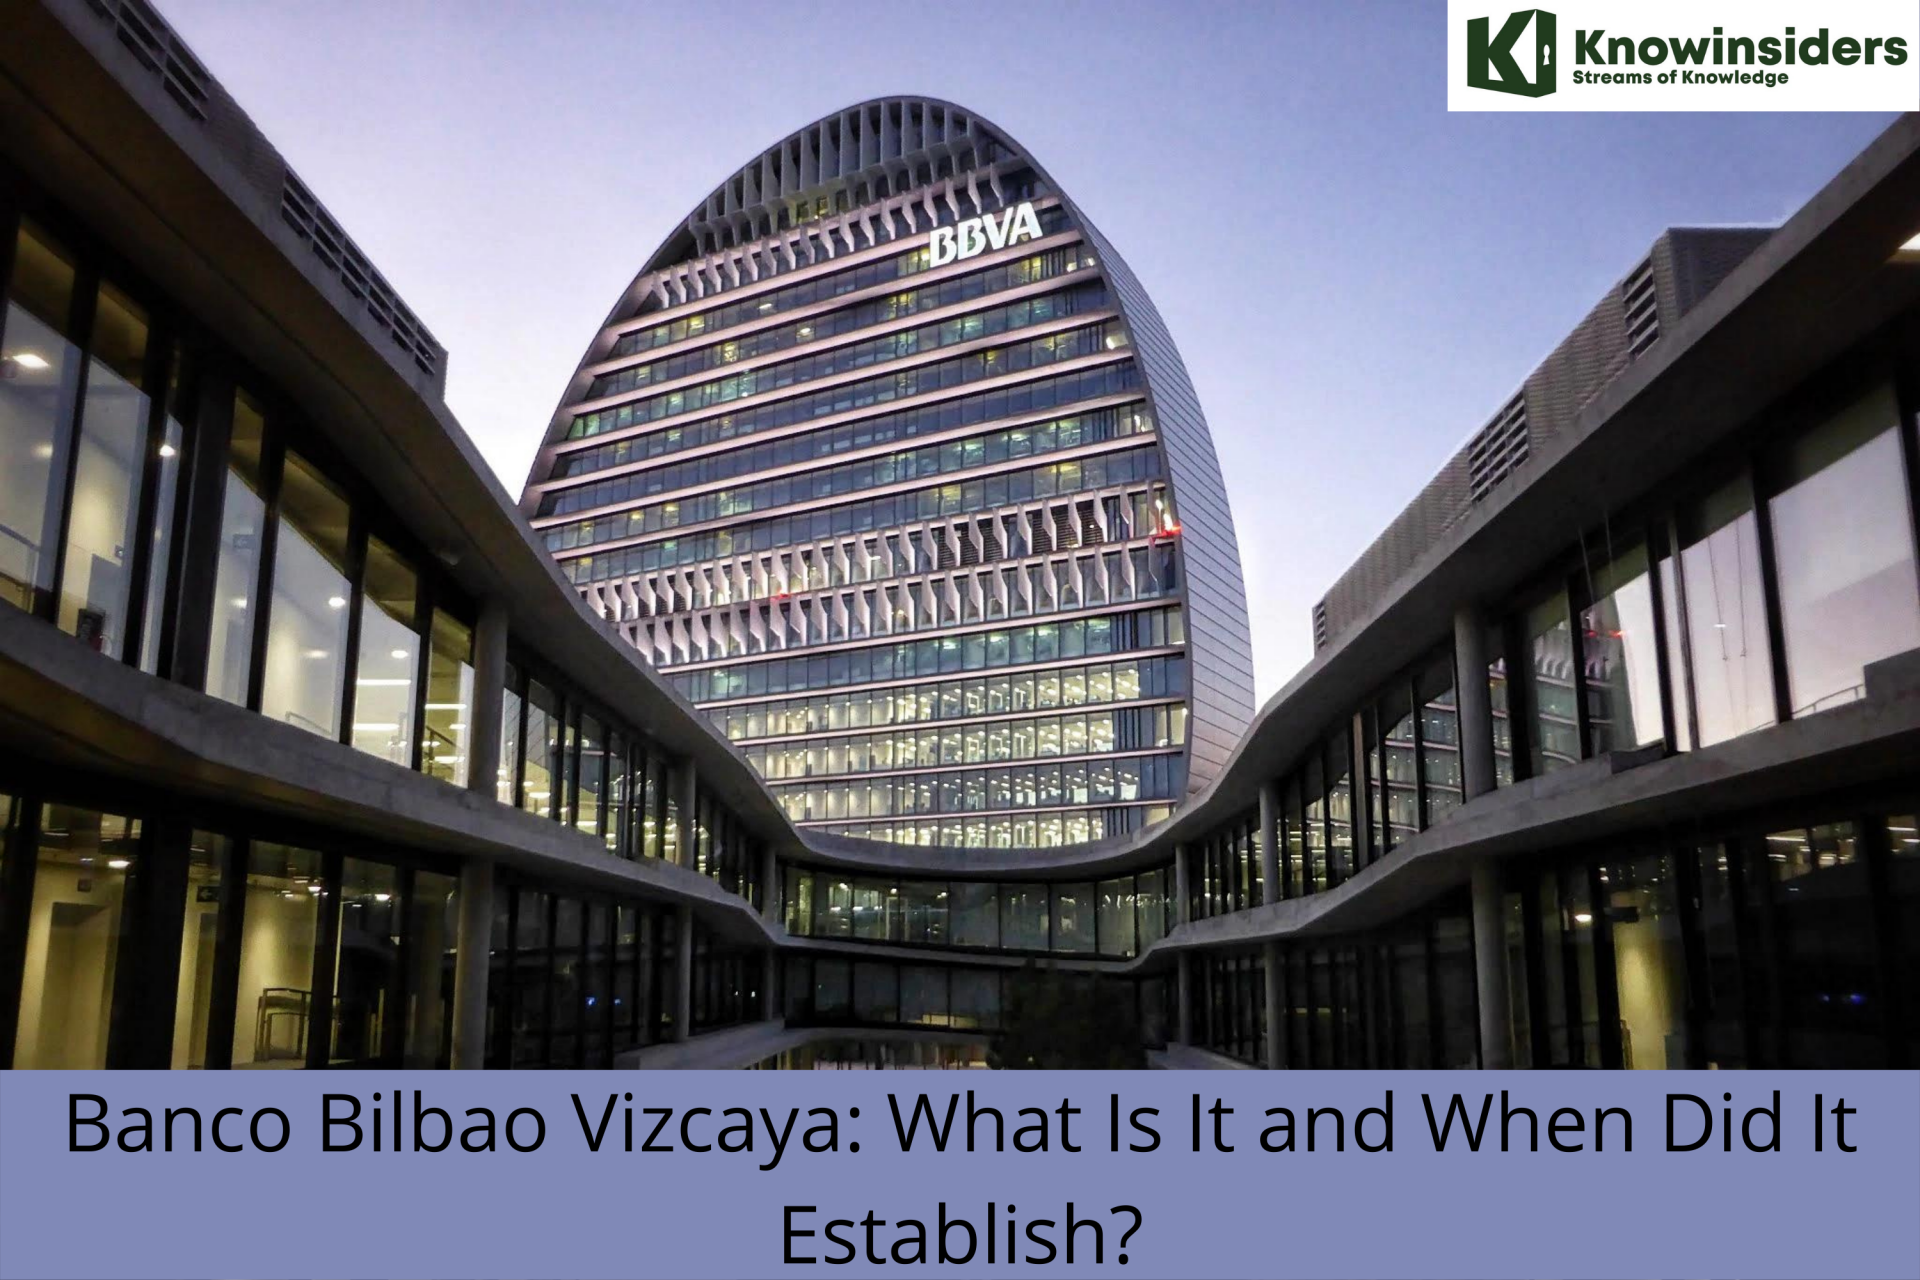 Banco Bilbao Vizcaya: What Is It and When Did It Establish?